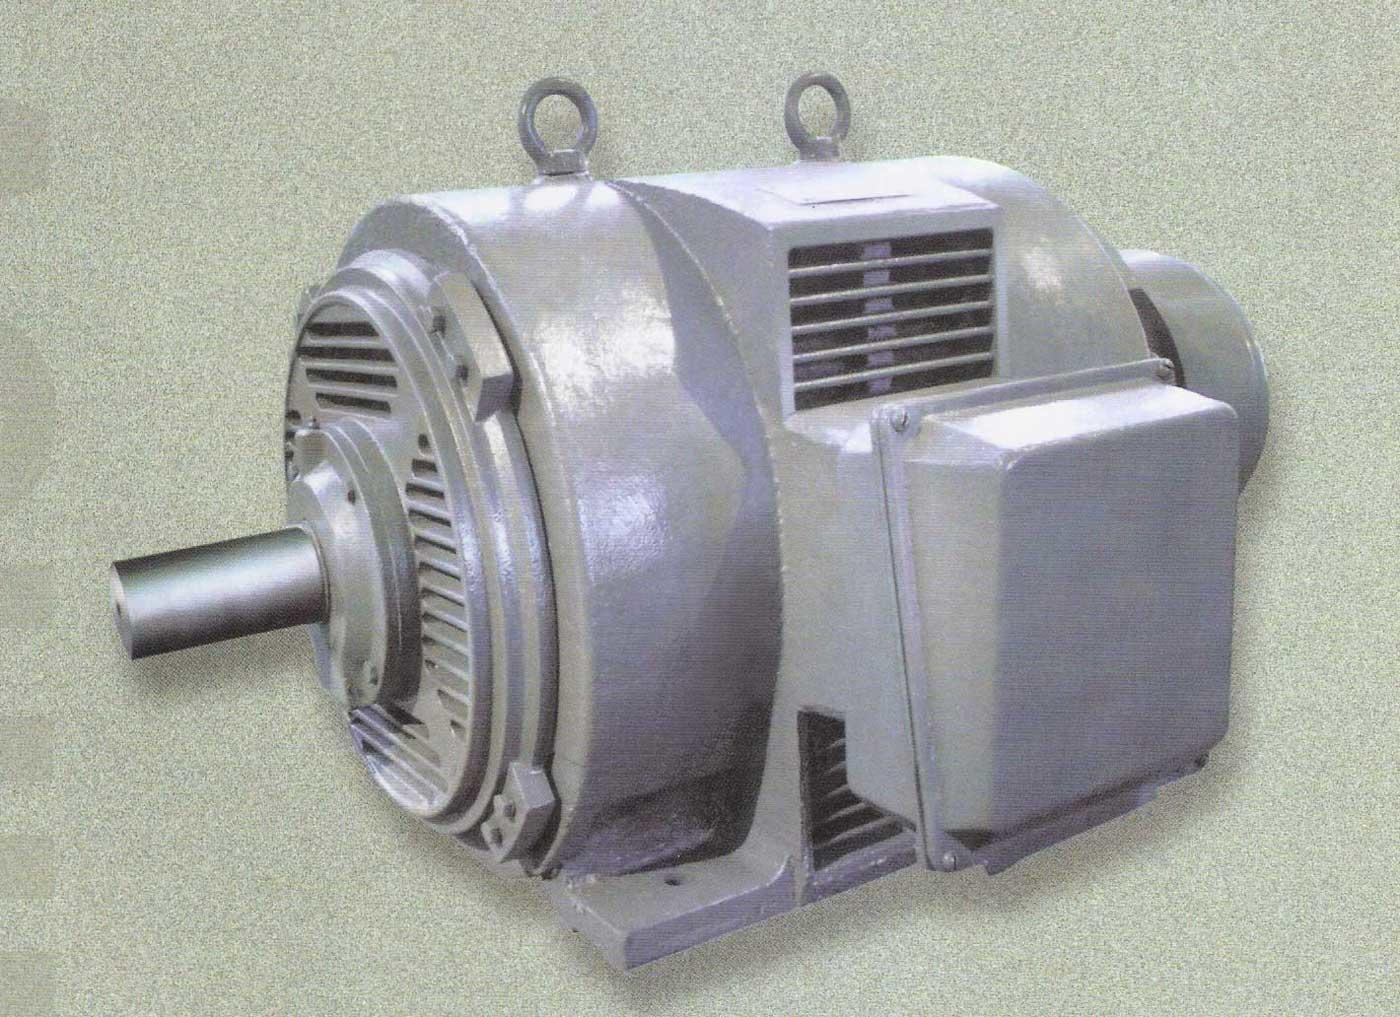 Slip ring induction motor